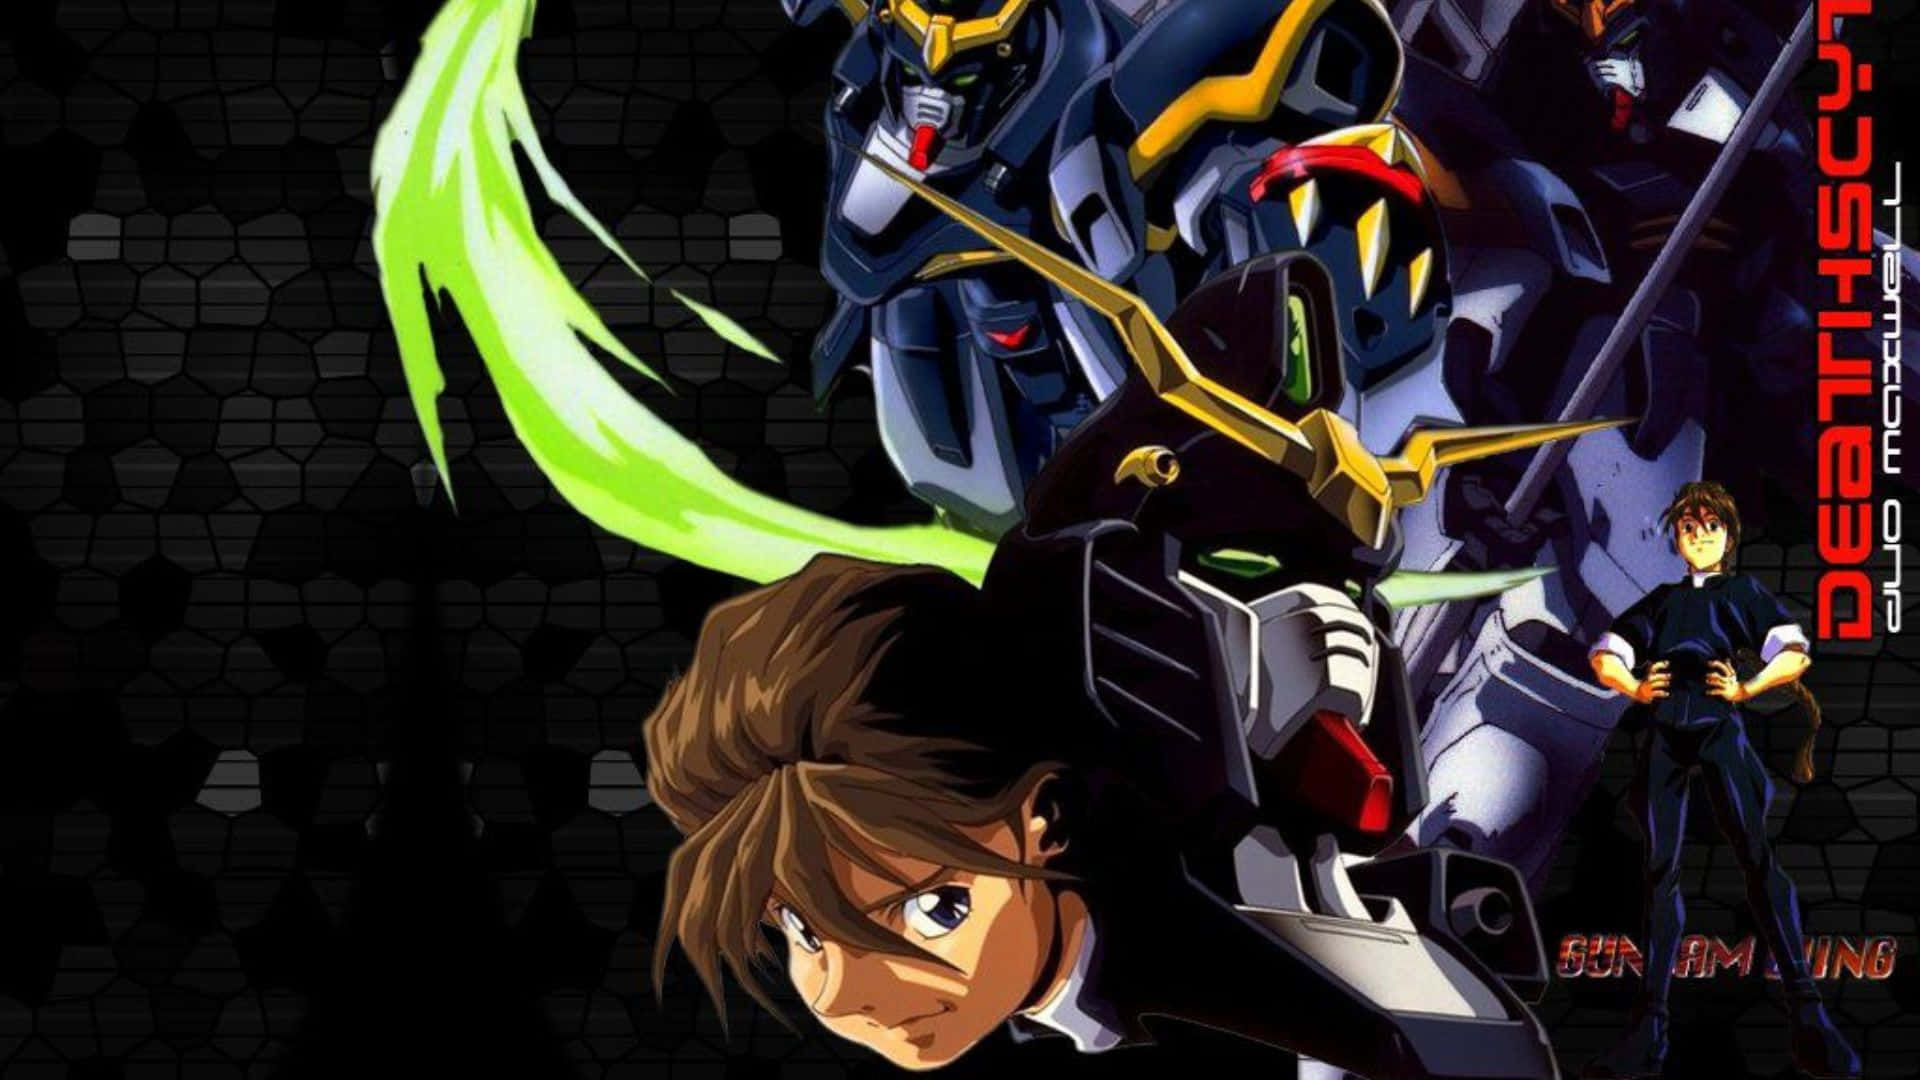 Duo Maxwell in action – Gundam Pilot of Deathscythe Wallpaper